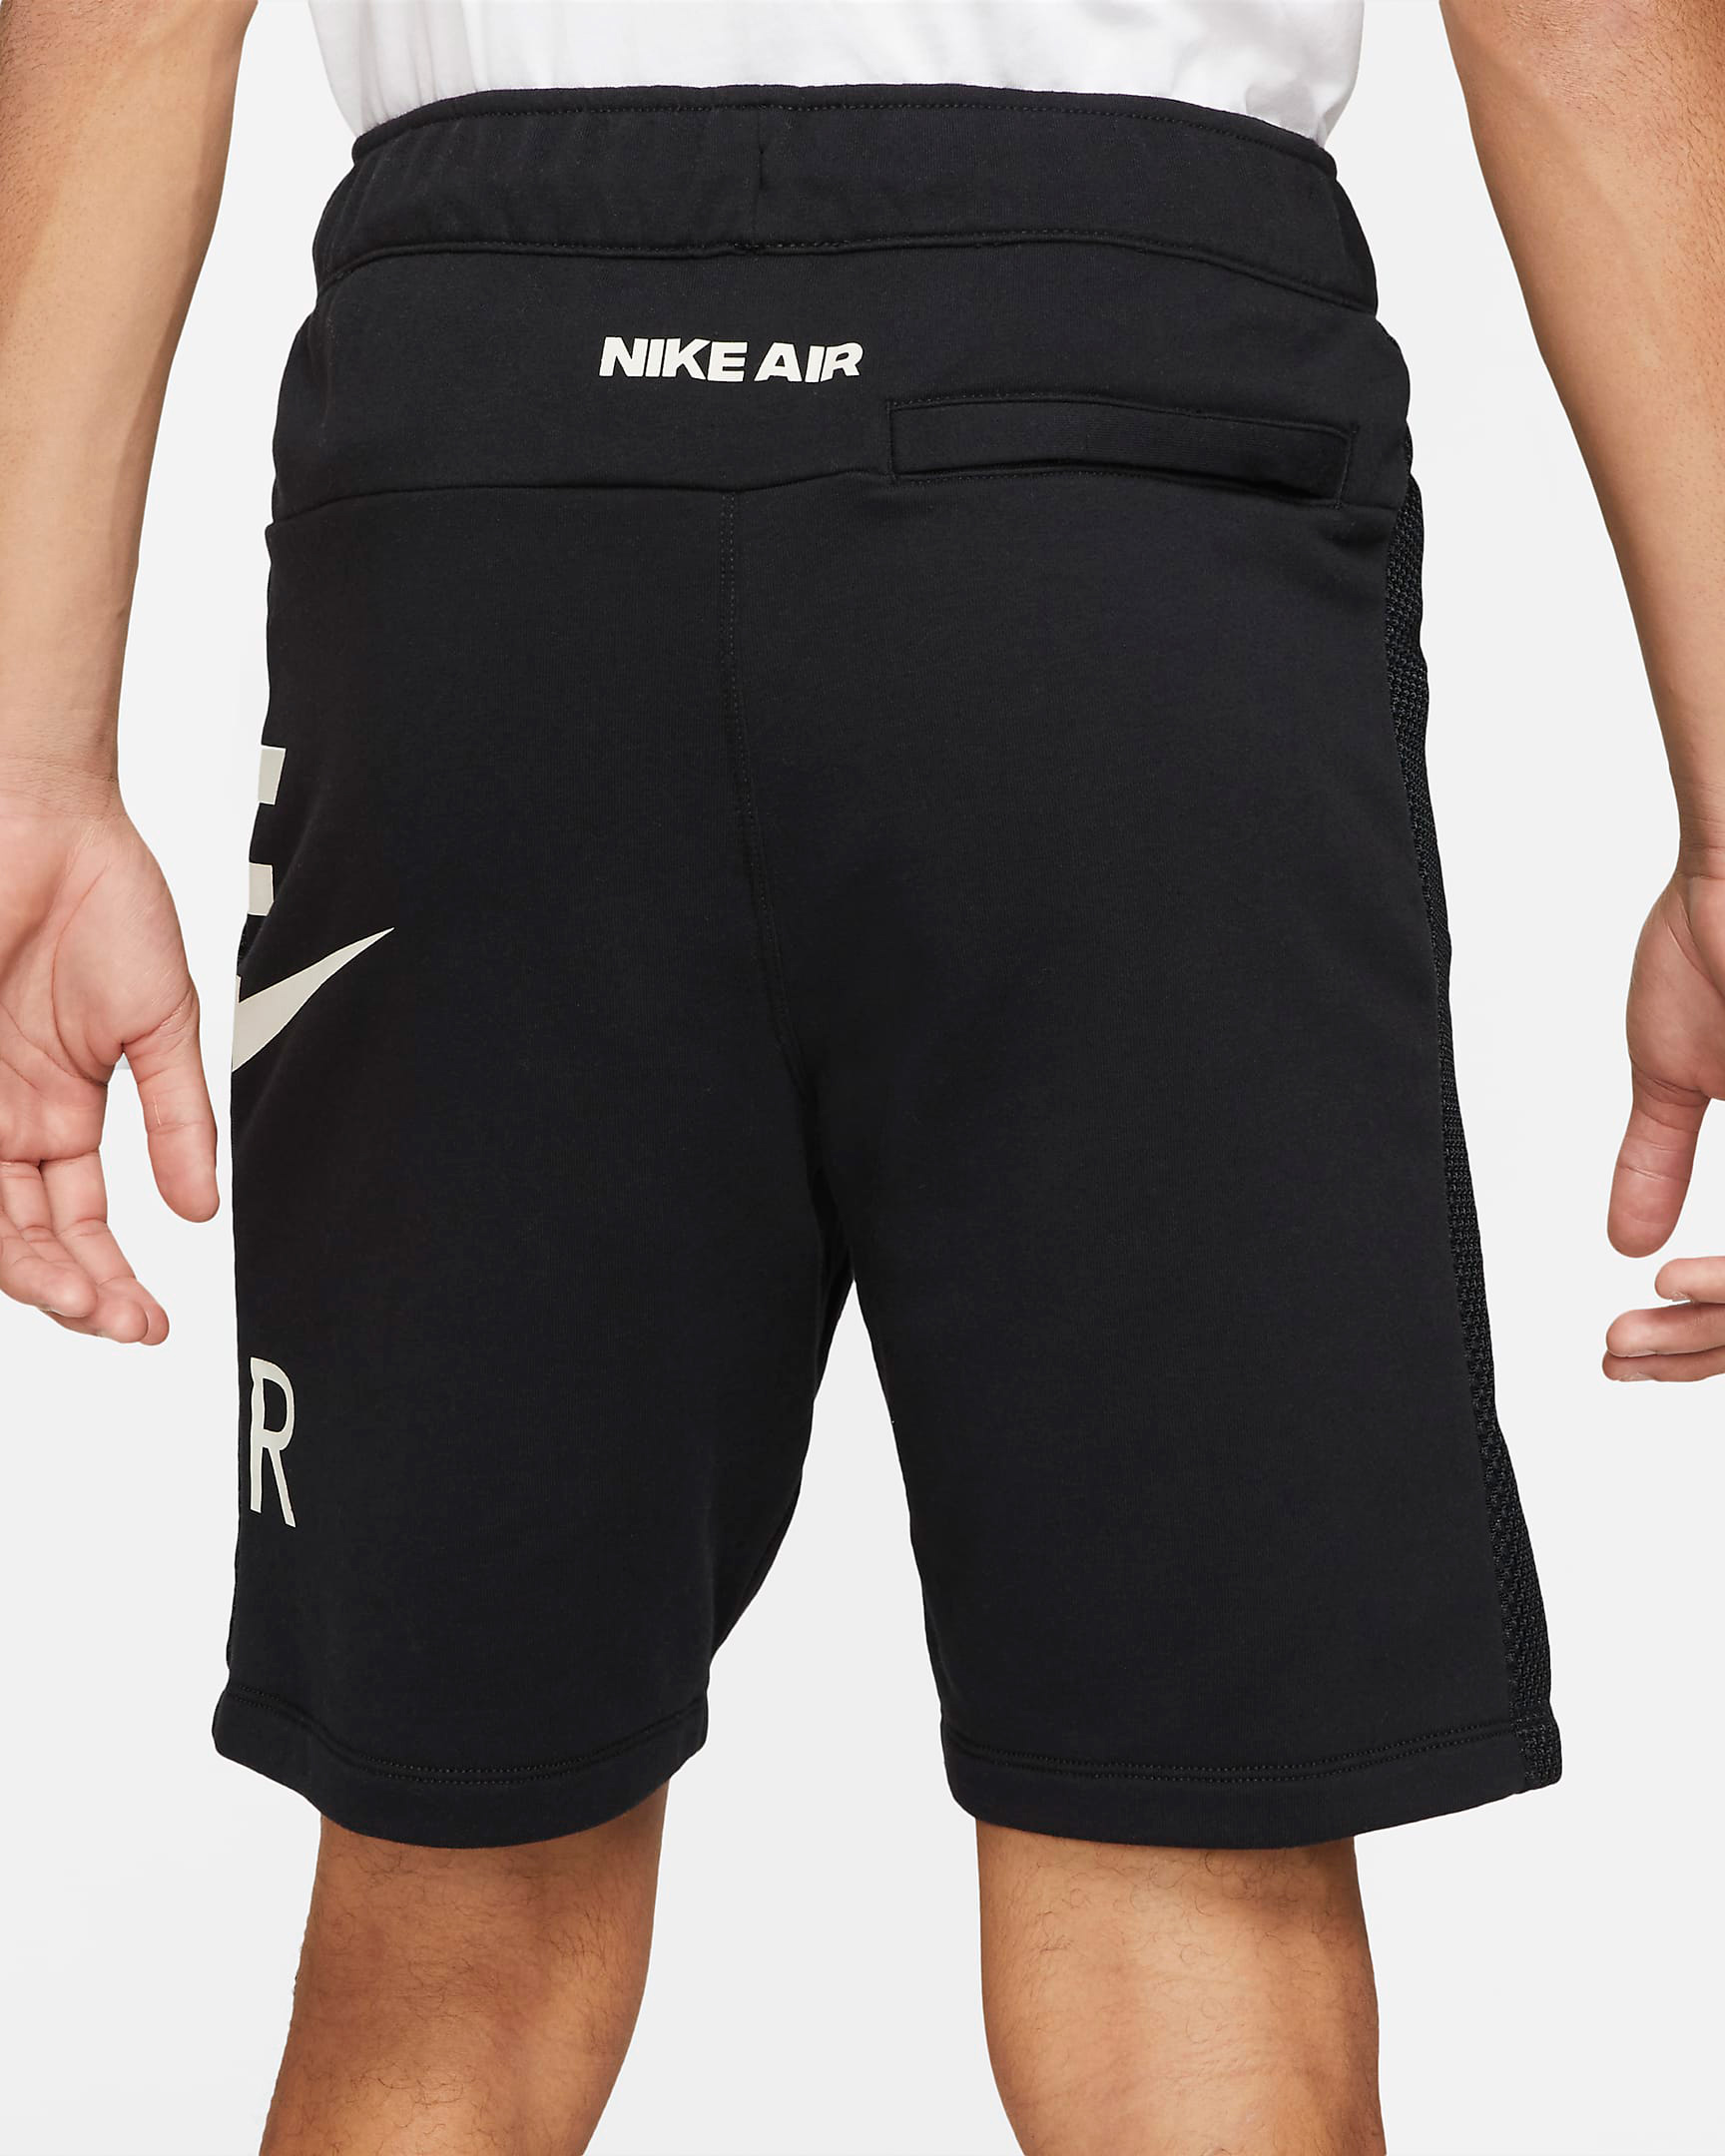 nike-air-hoodie-shorts-light-bone-3